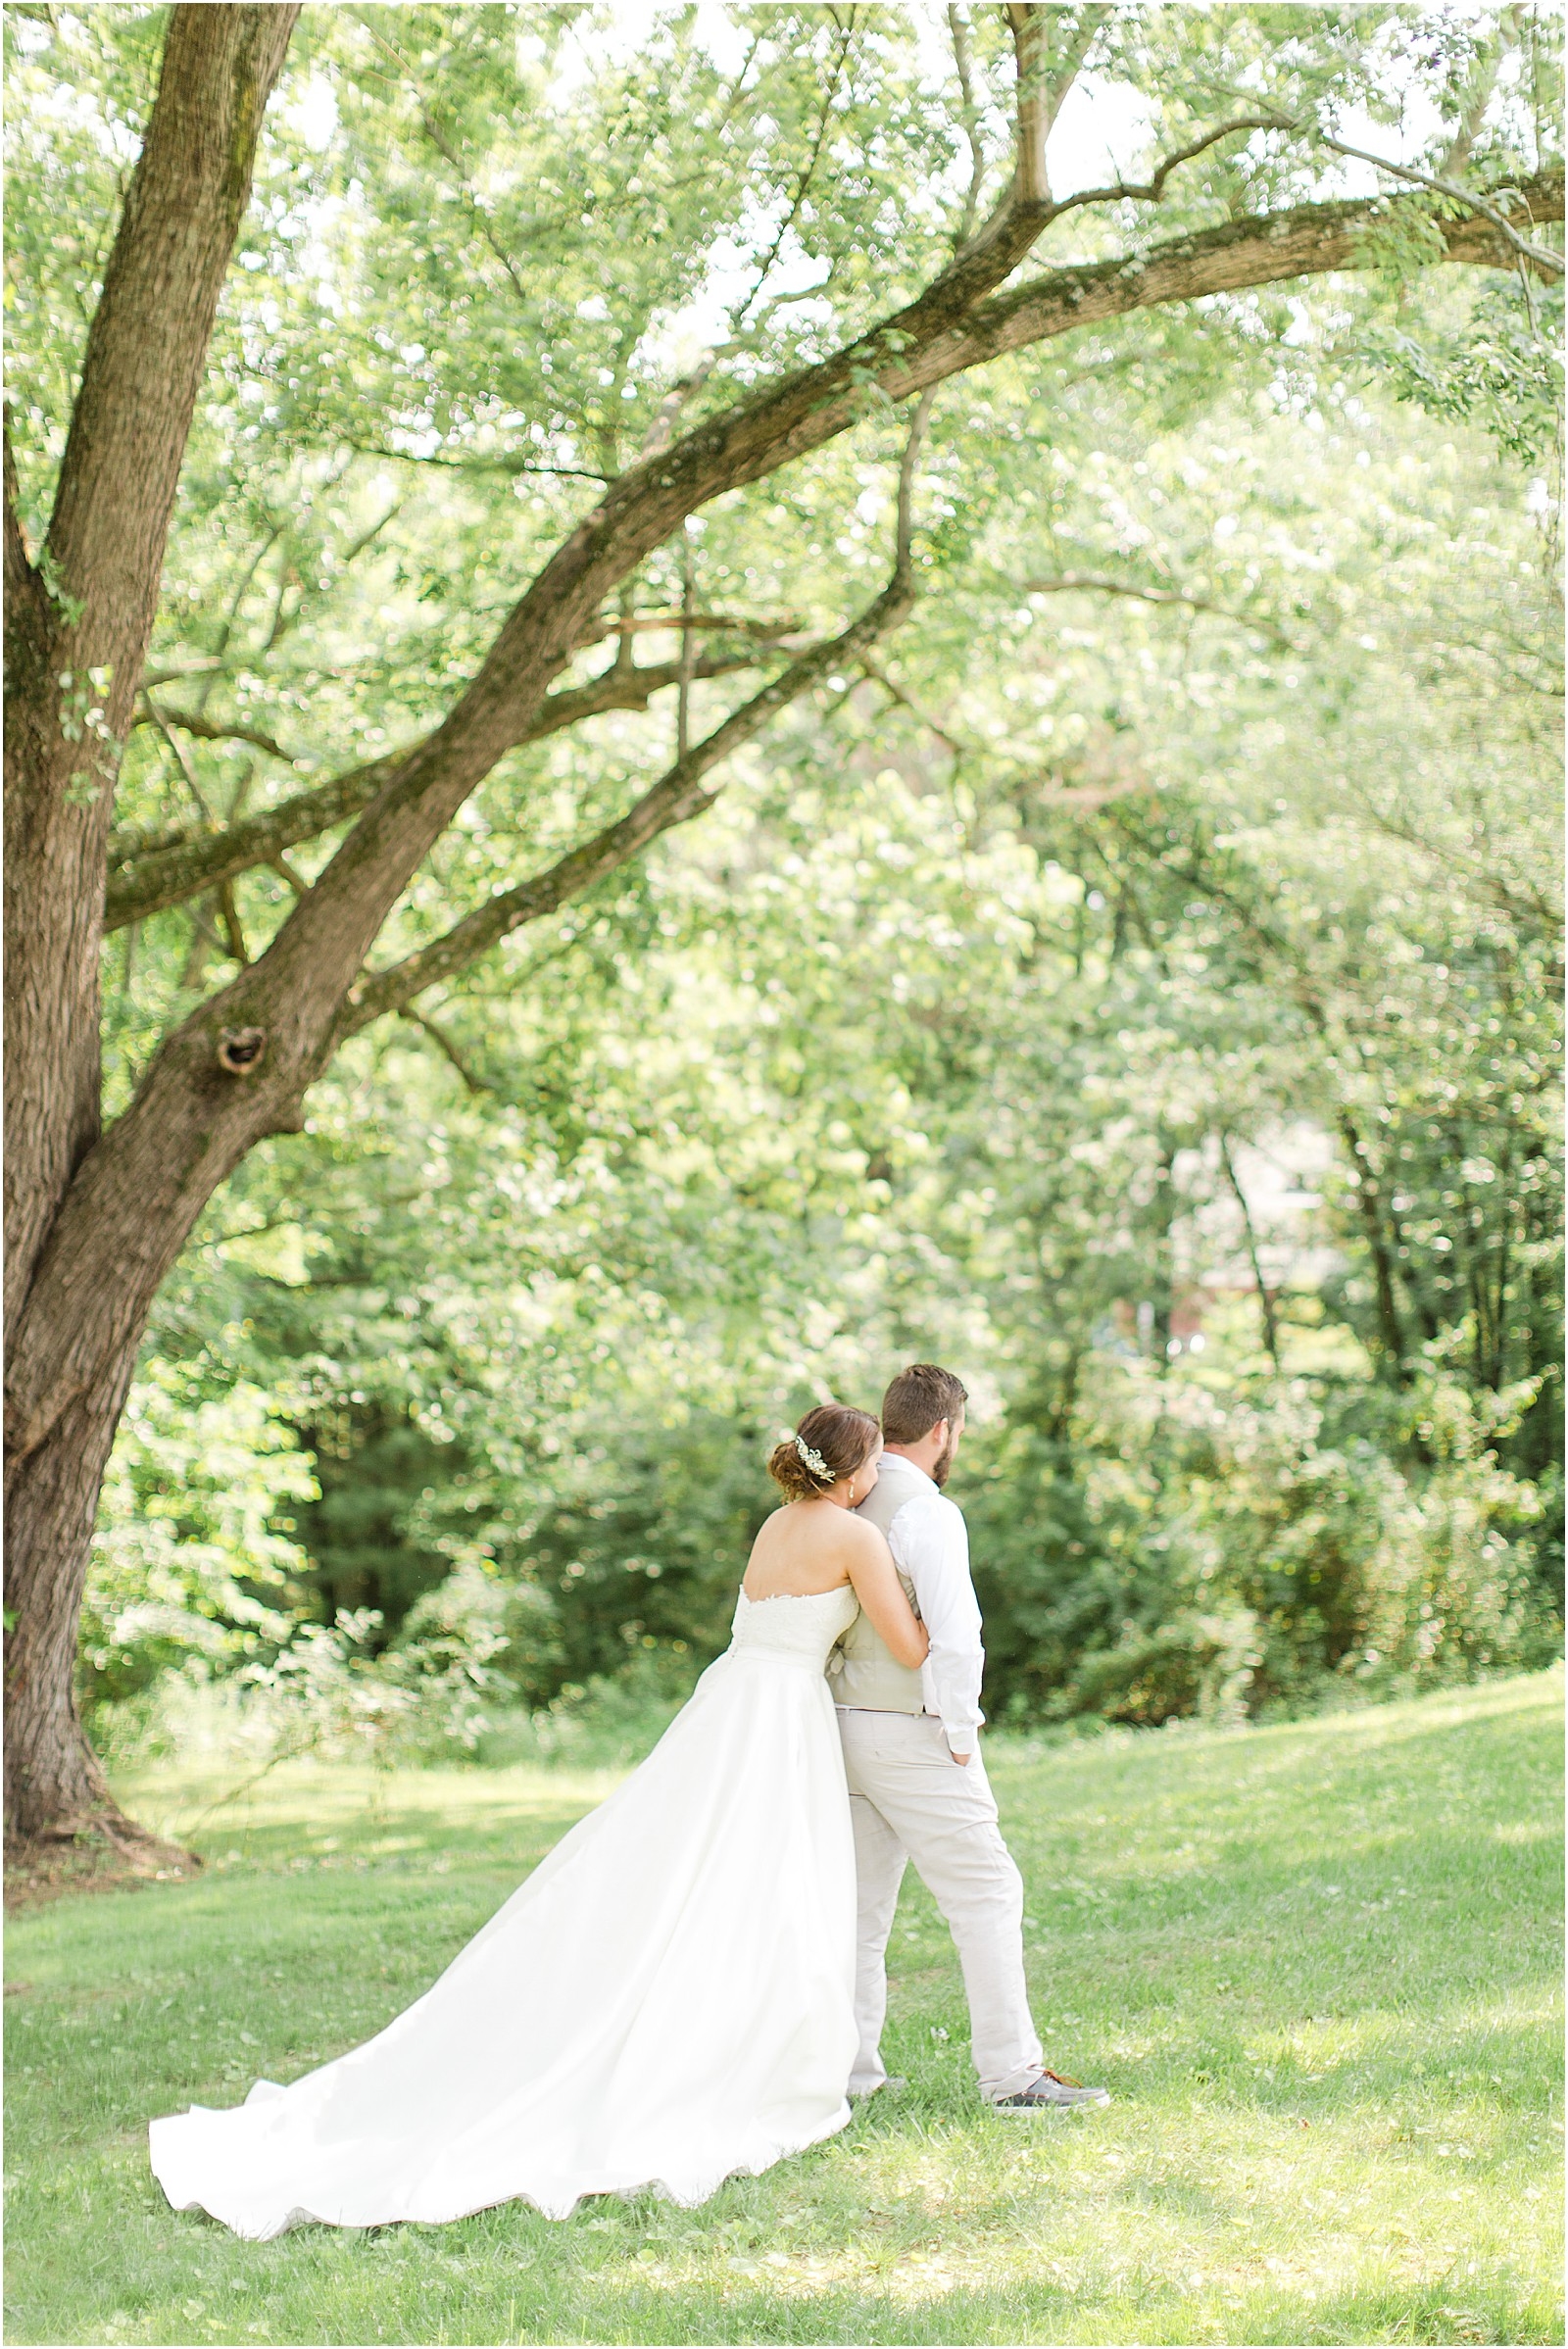 A Evansville Indiana Backyard Wedding | Bailey and Ben 020.jpg